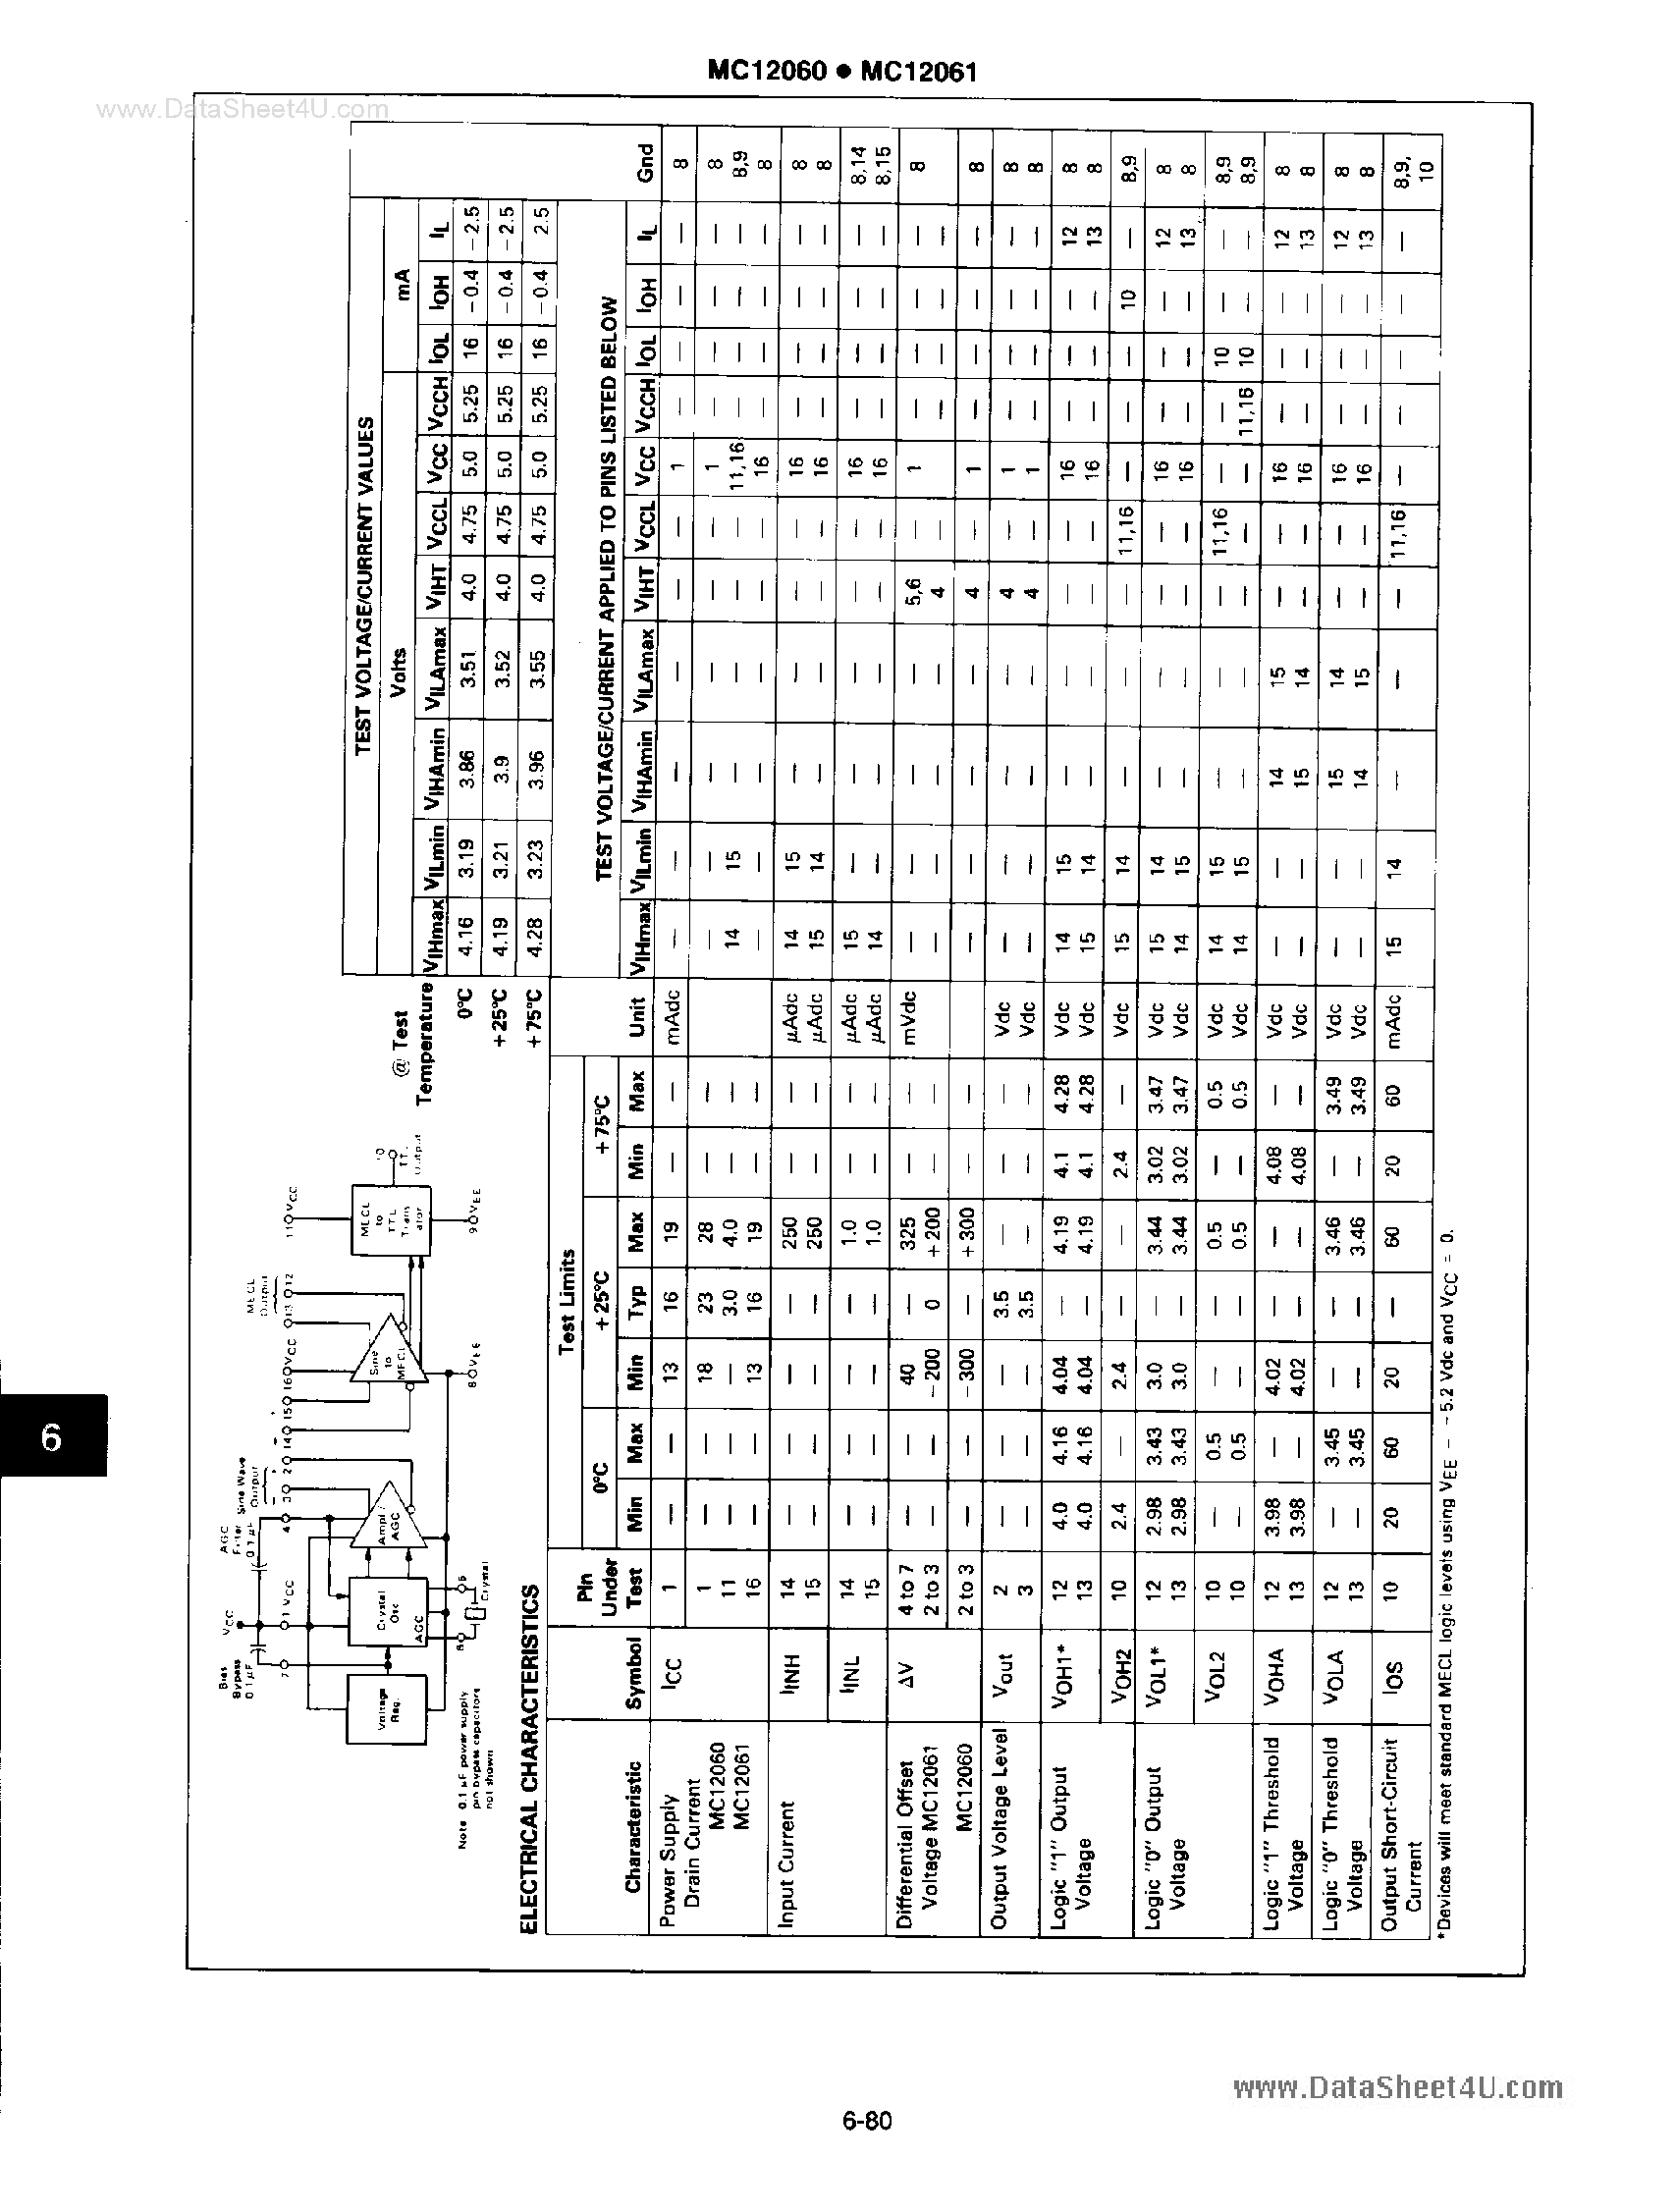 Datasheet MC12060 - (MC12060 / MC12061) Crystal Oscillator page 2